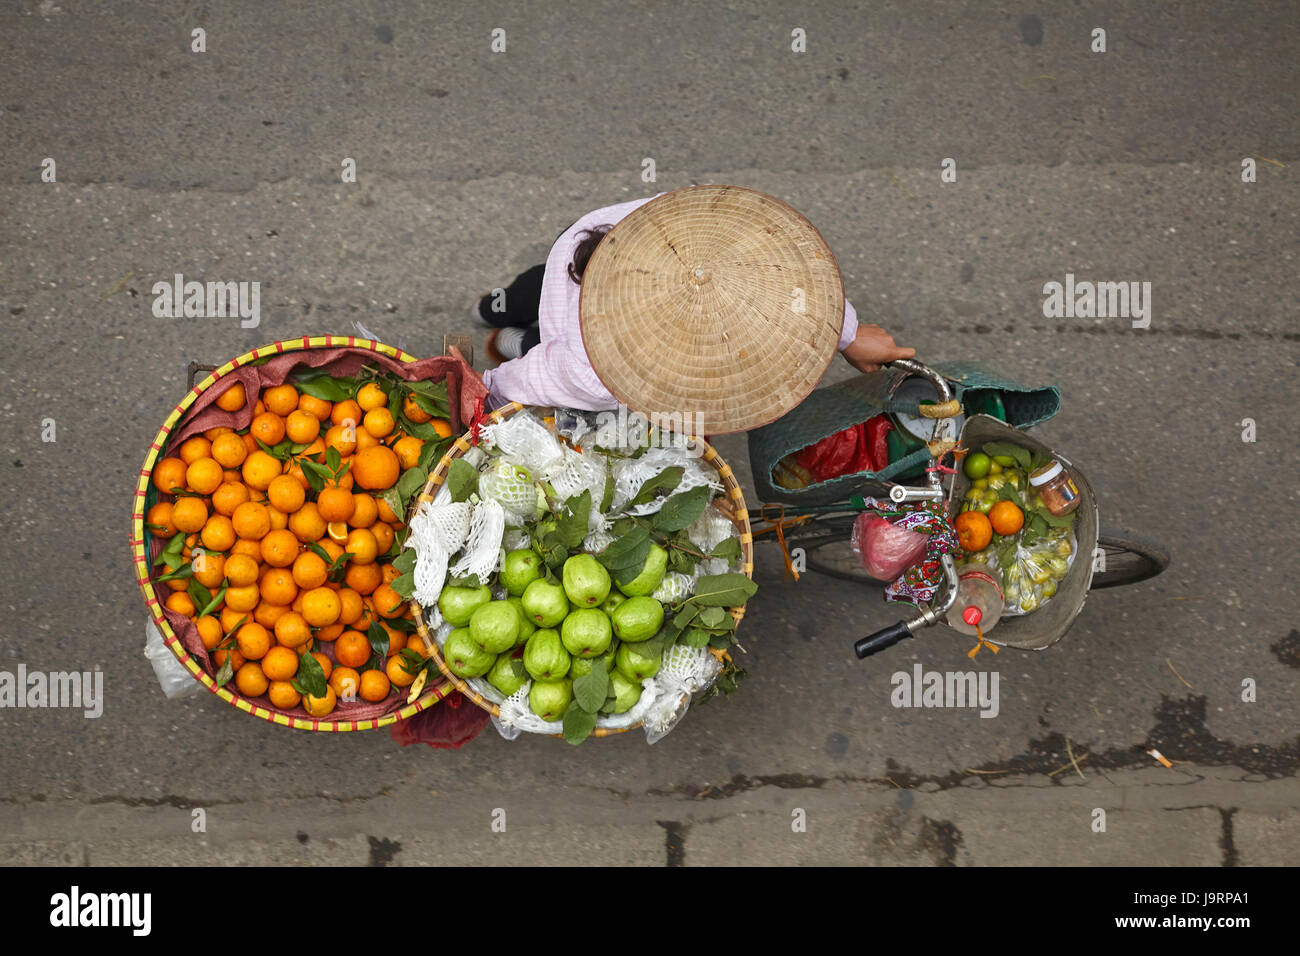 Street vendor with round baskets of fruit on bicycle, Old Quarter, Hanoi, Vietnam Stock Photo